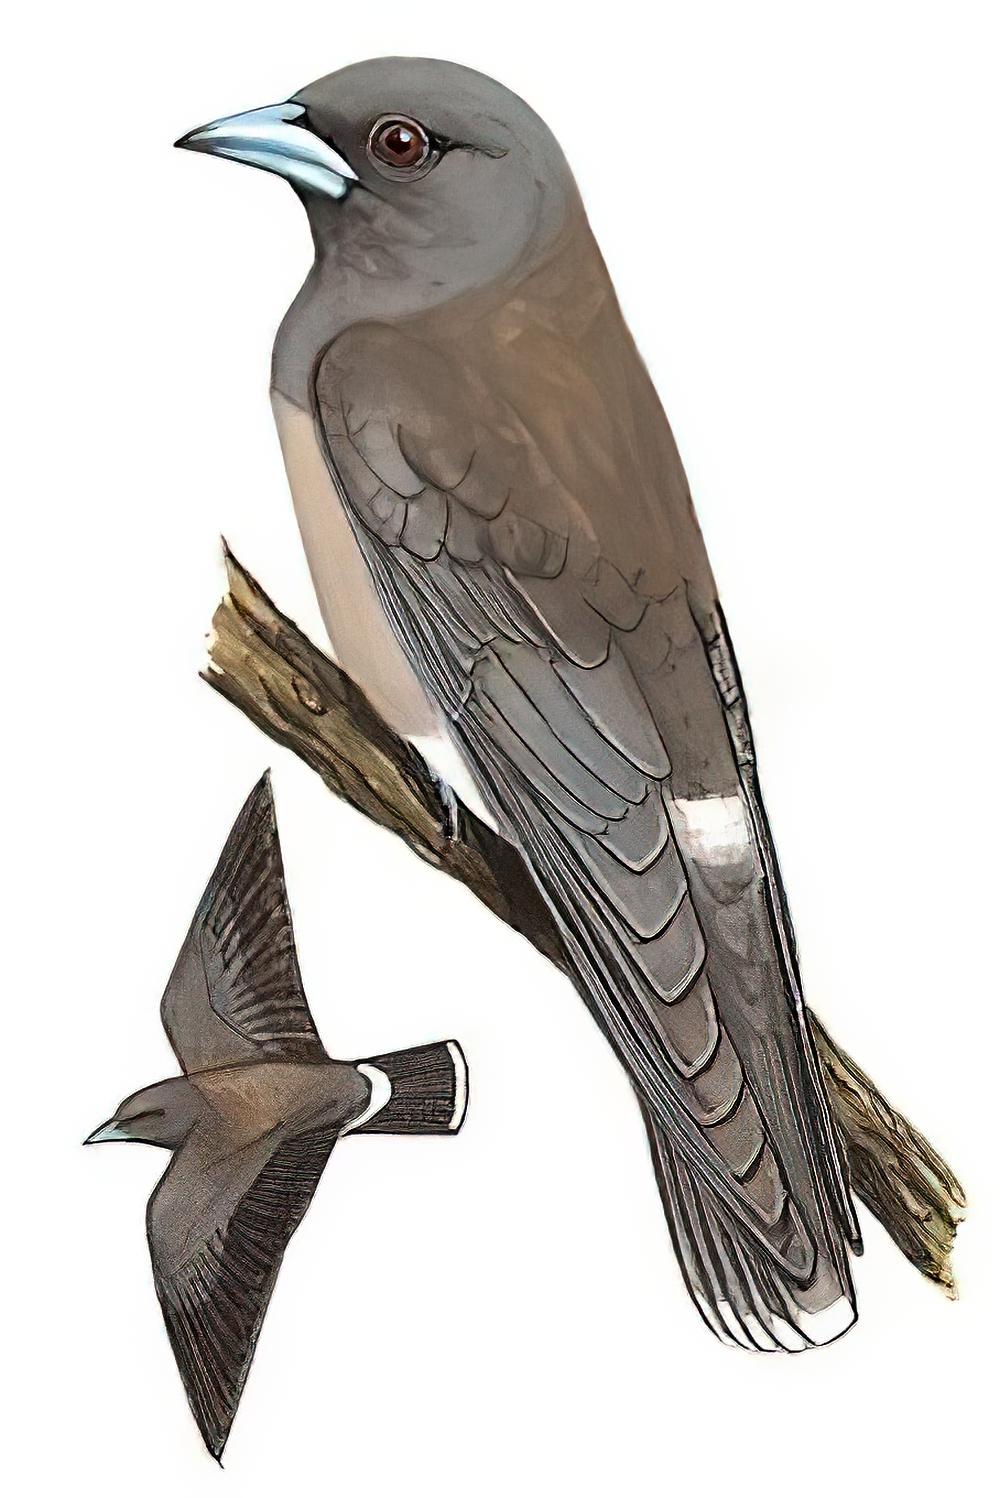 灰燕鵙 / Ashy Woodswallow / Artamus fuscus